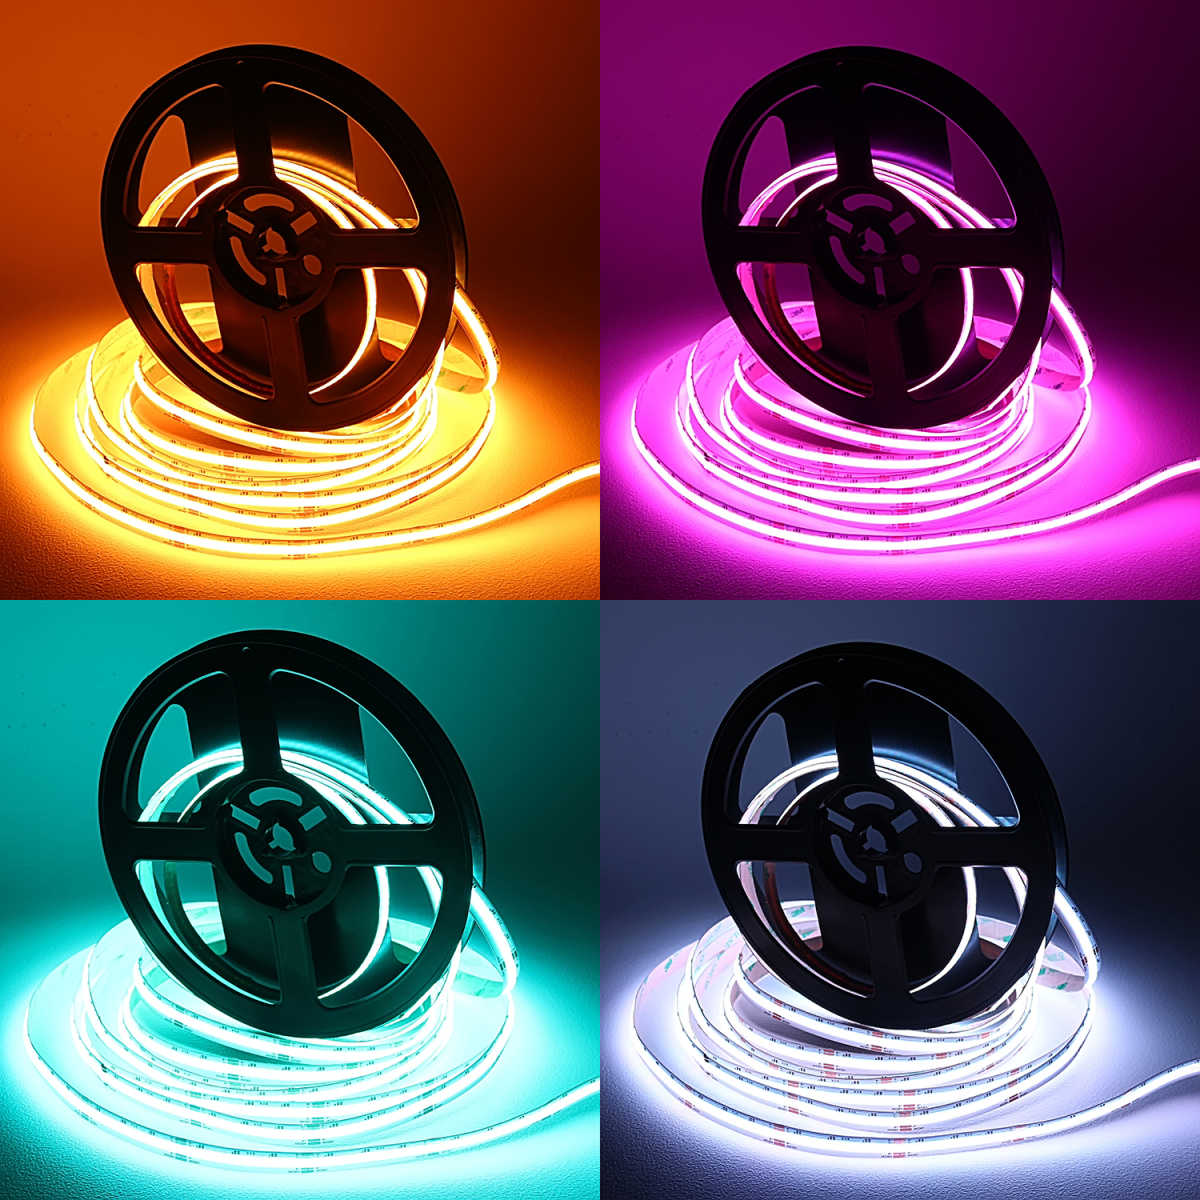 COB LED RGB Streifen | 840 LEDs - 690 Lumen - 15.8 Watt je Meter | 180° 24V DC |